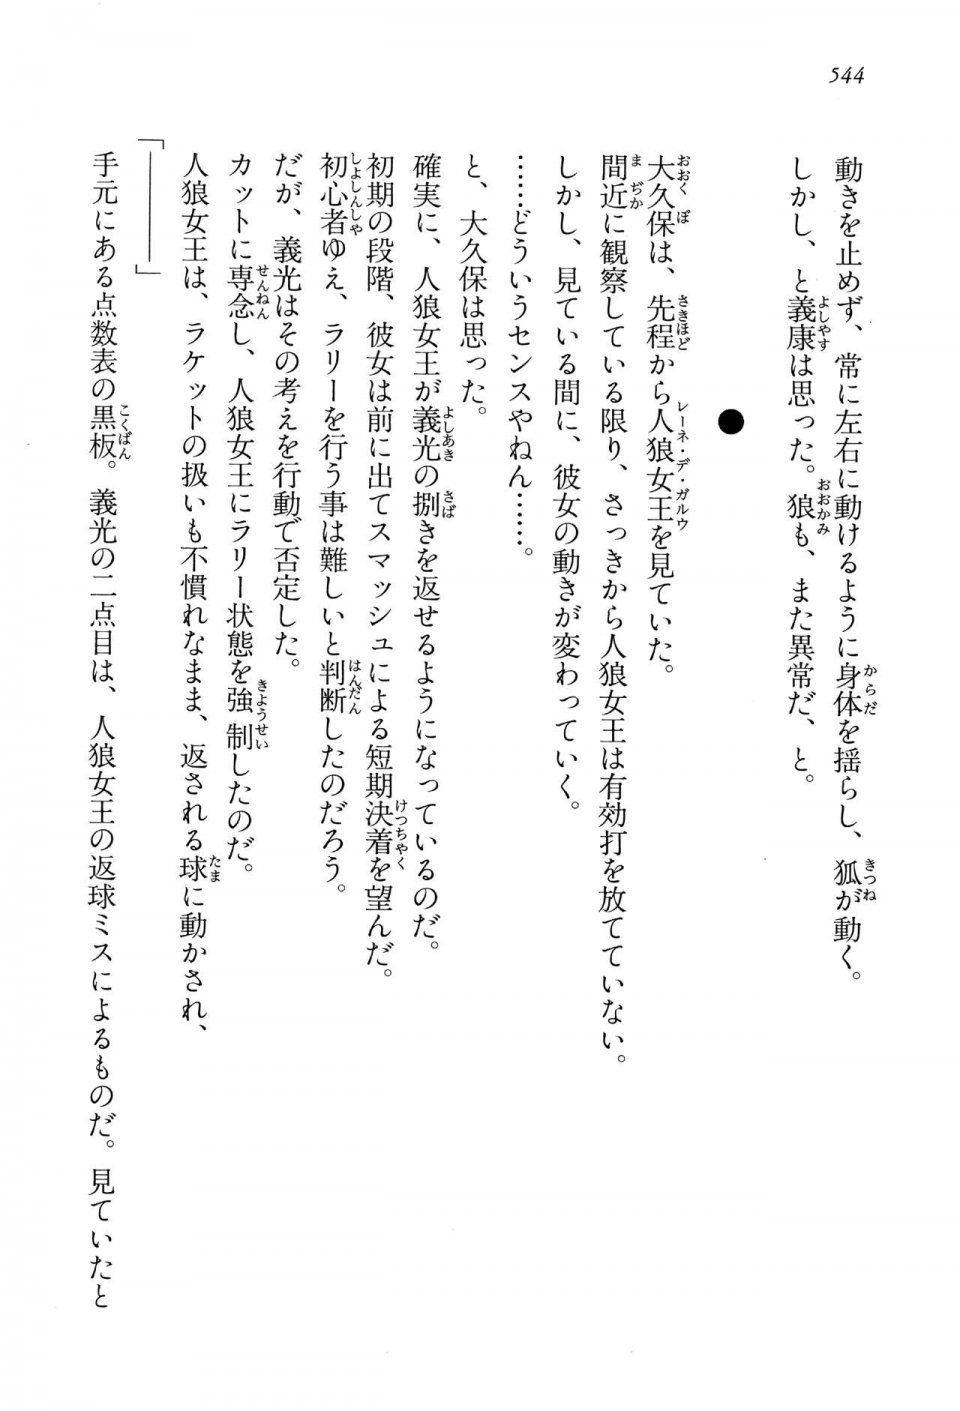 Kyoukai Senjou no Horizon LN Vol 15(6C) Part 2 - Photo #14